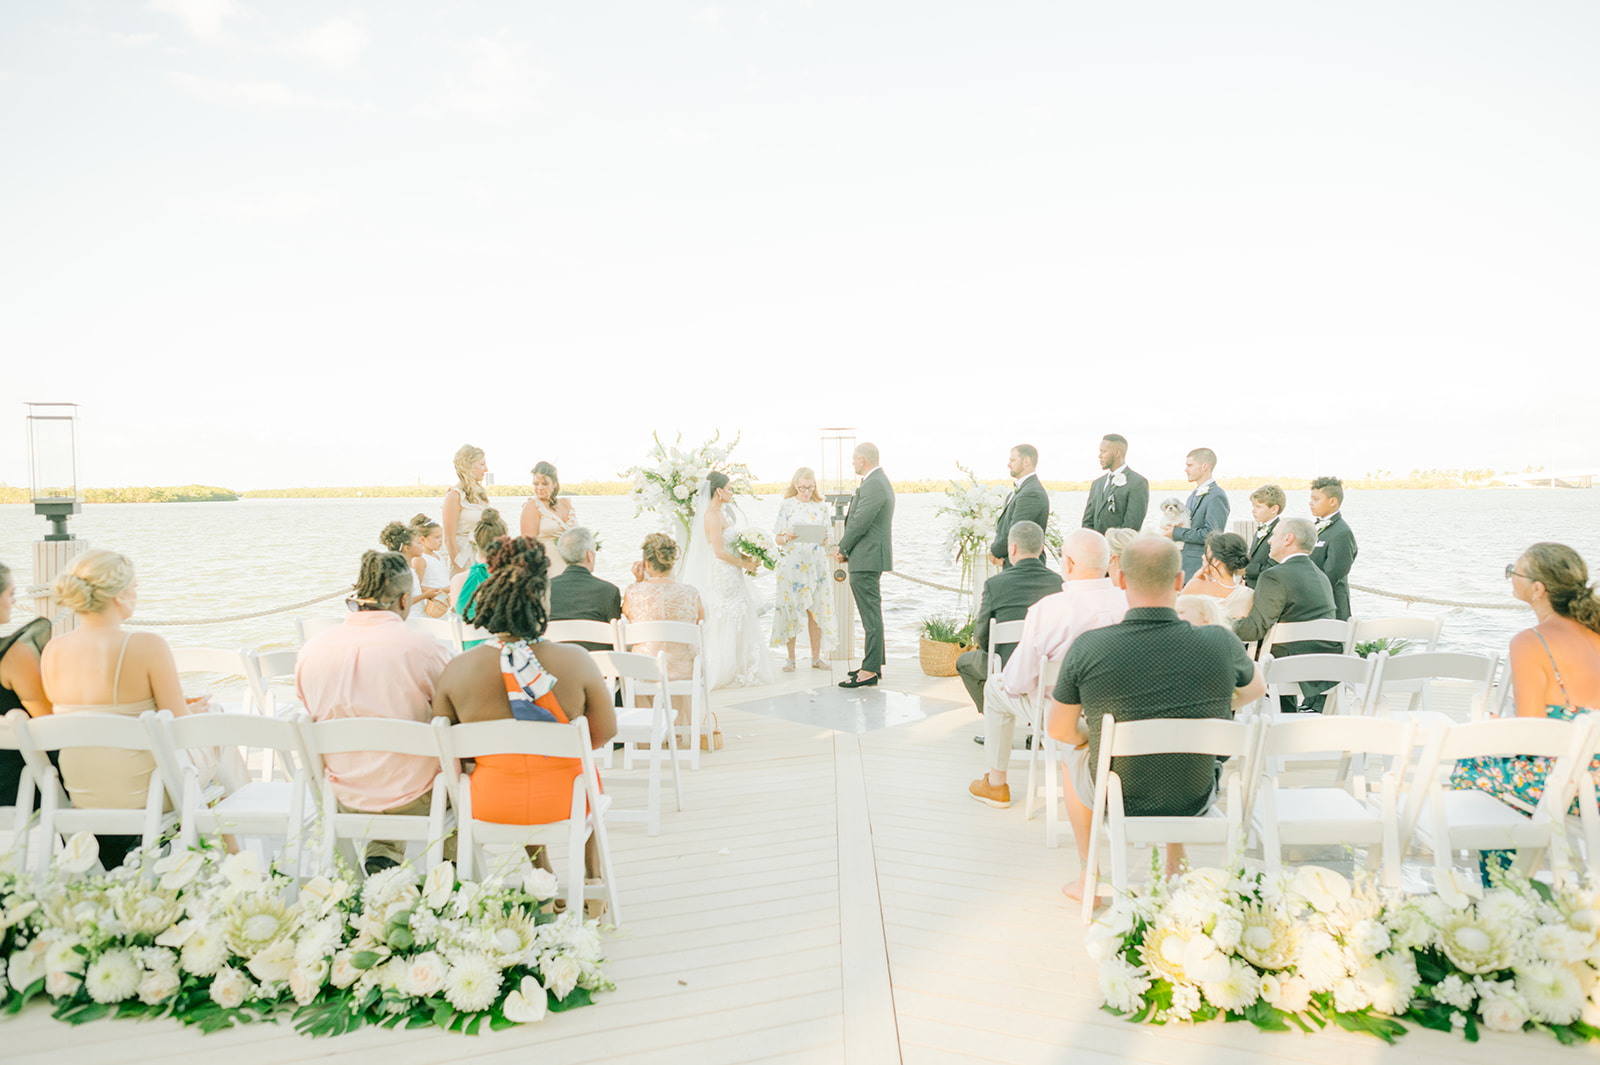 Timeless Marco Island Beach Wedding Photography - A Perfect Keepsake
